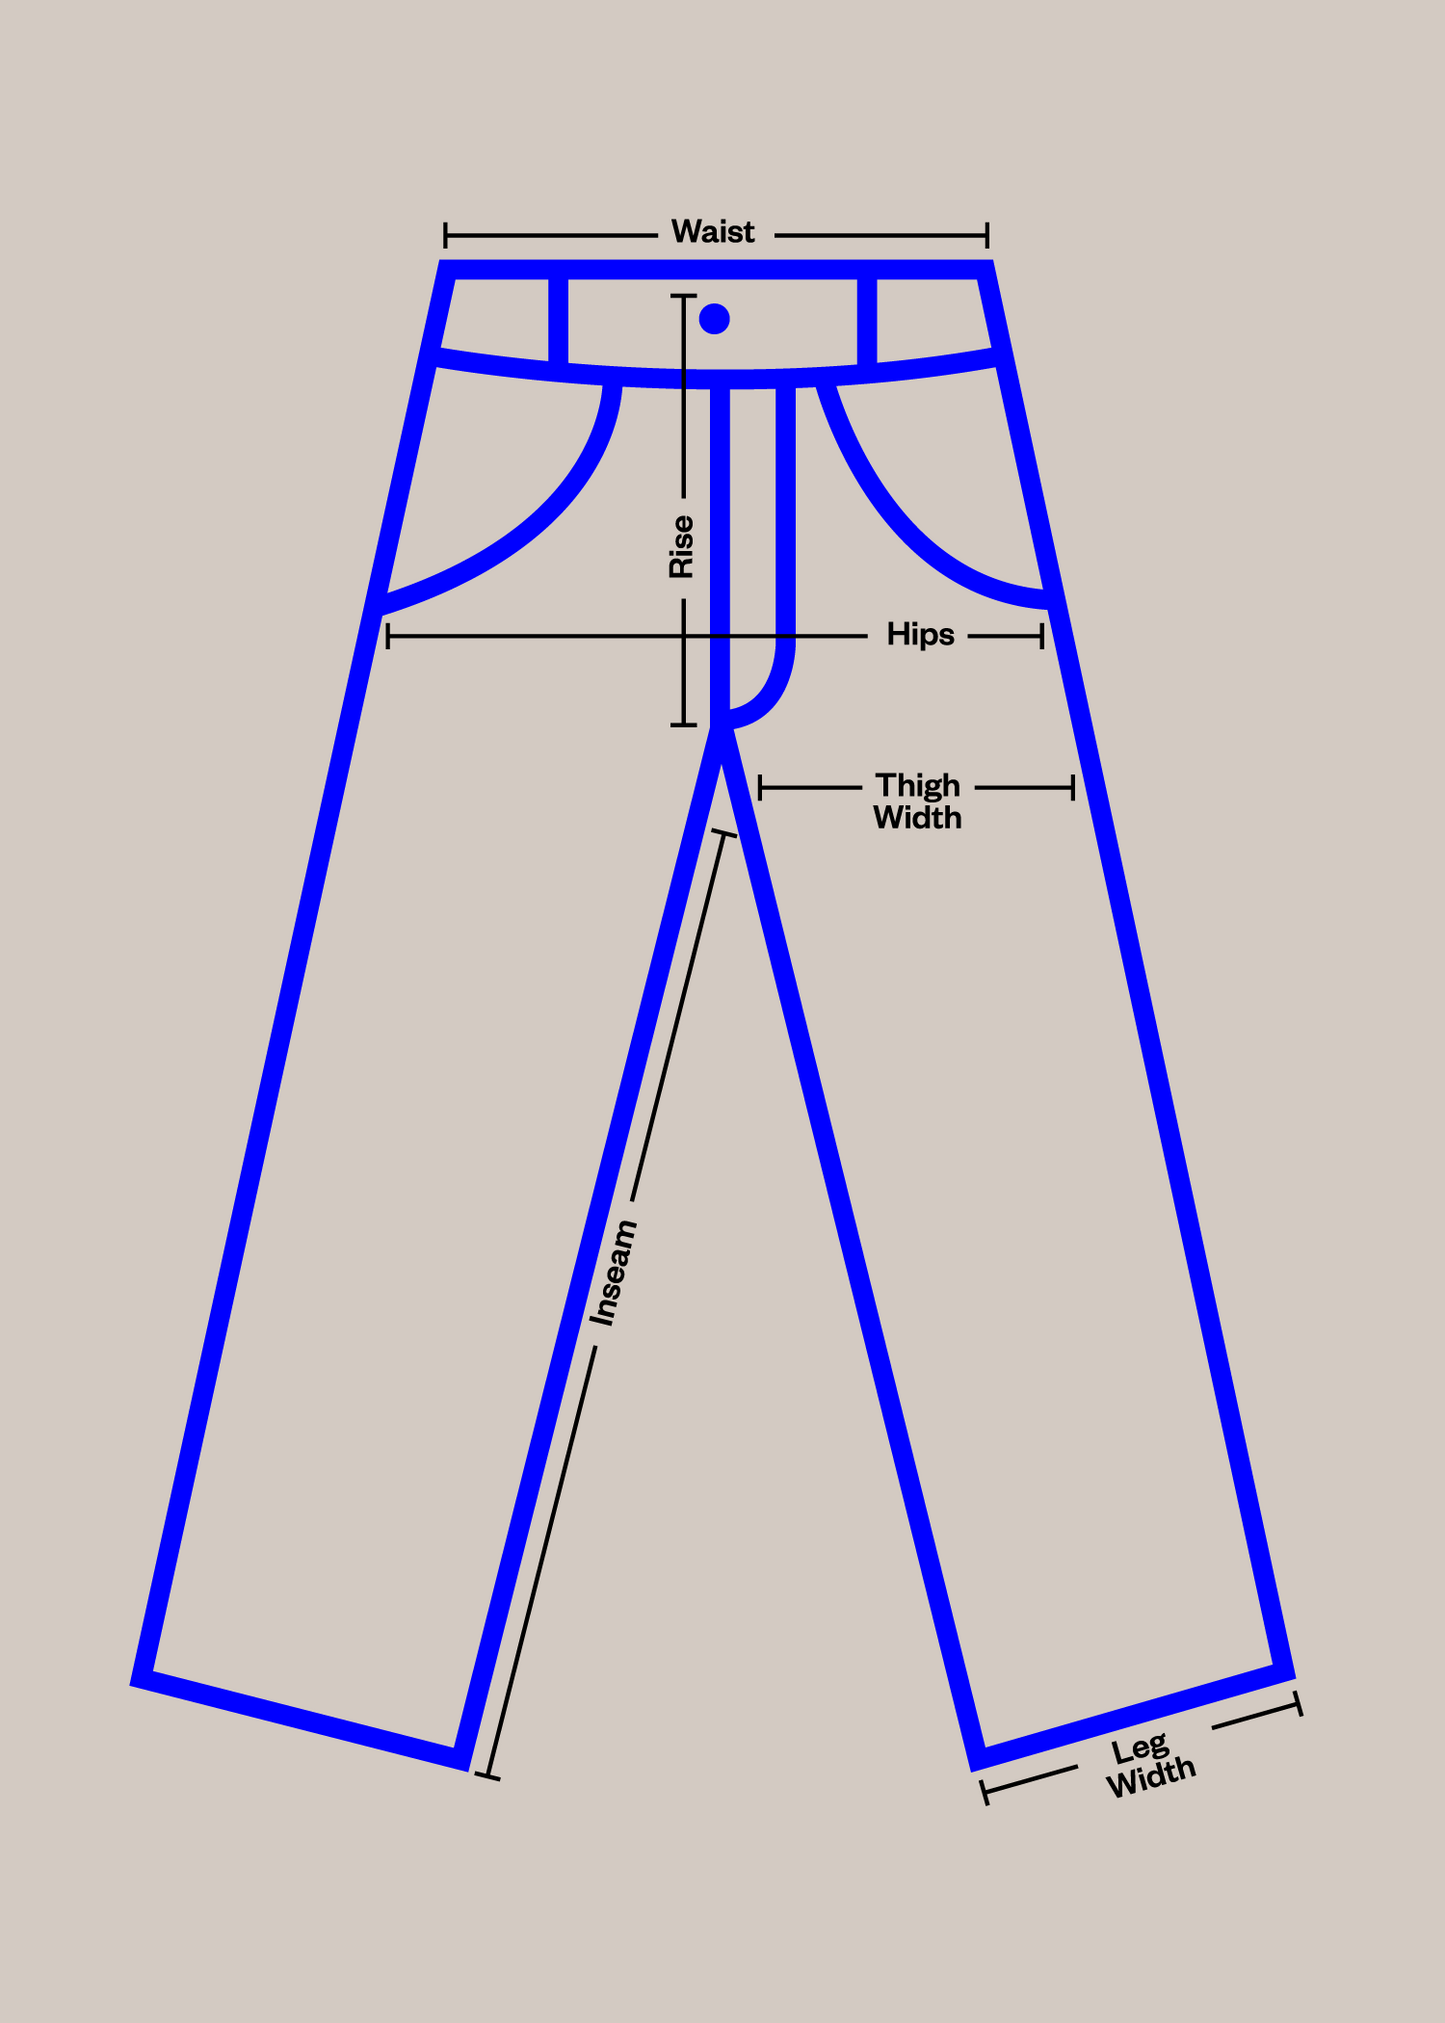 Vintage Military Trouser Shorts Size Women's 33 Men's 36